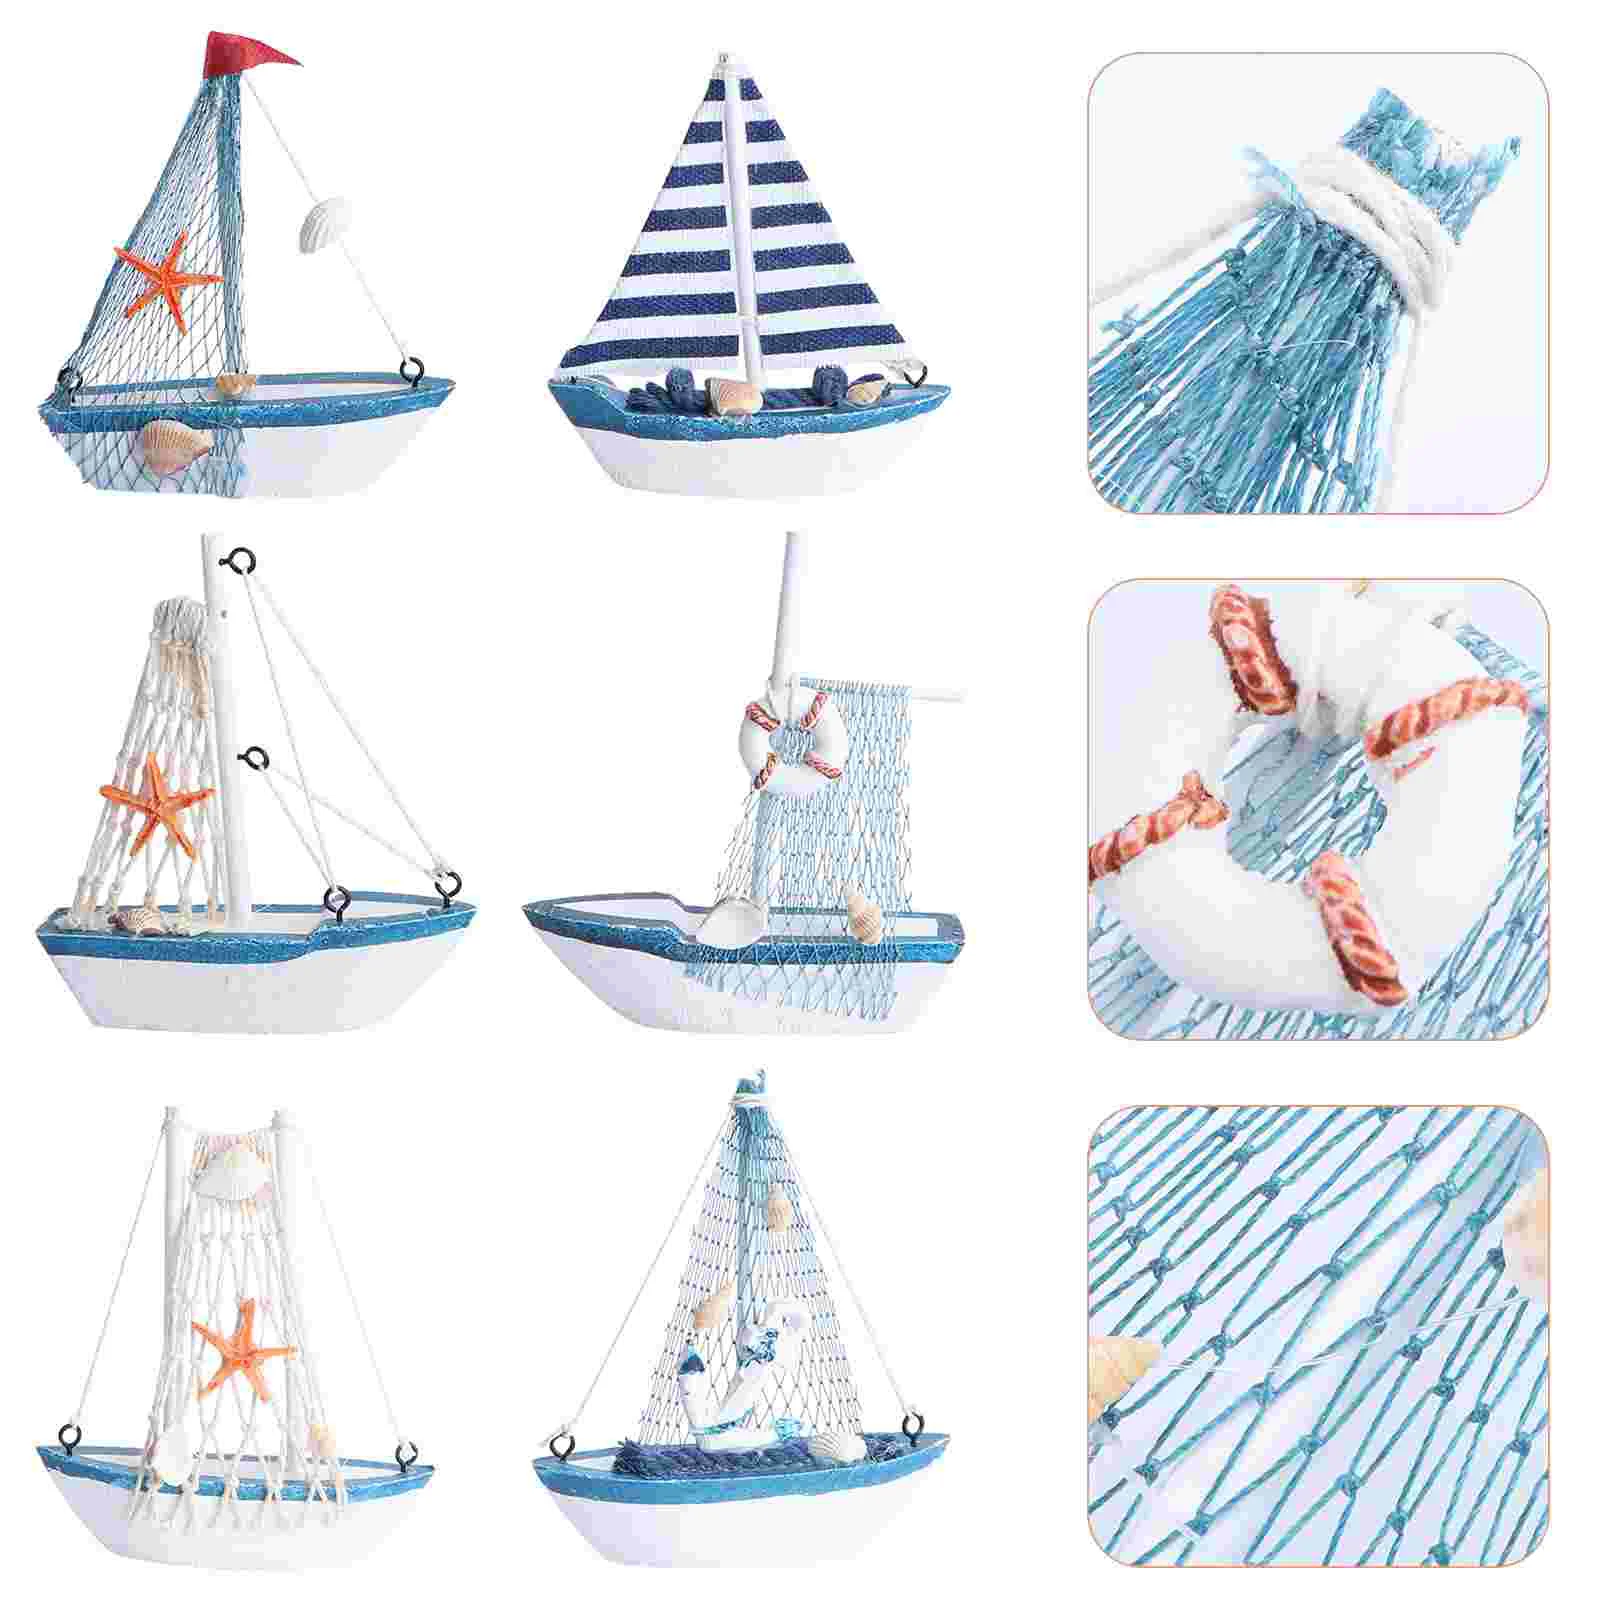 

Sailboat Boat Wooden Model Nautical Decor Decoration Mini Ship Sailing Miniature Ornament Figurine Beach Mediterranean Wood